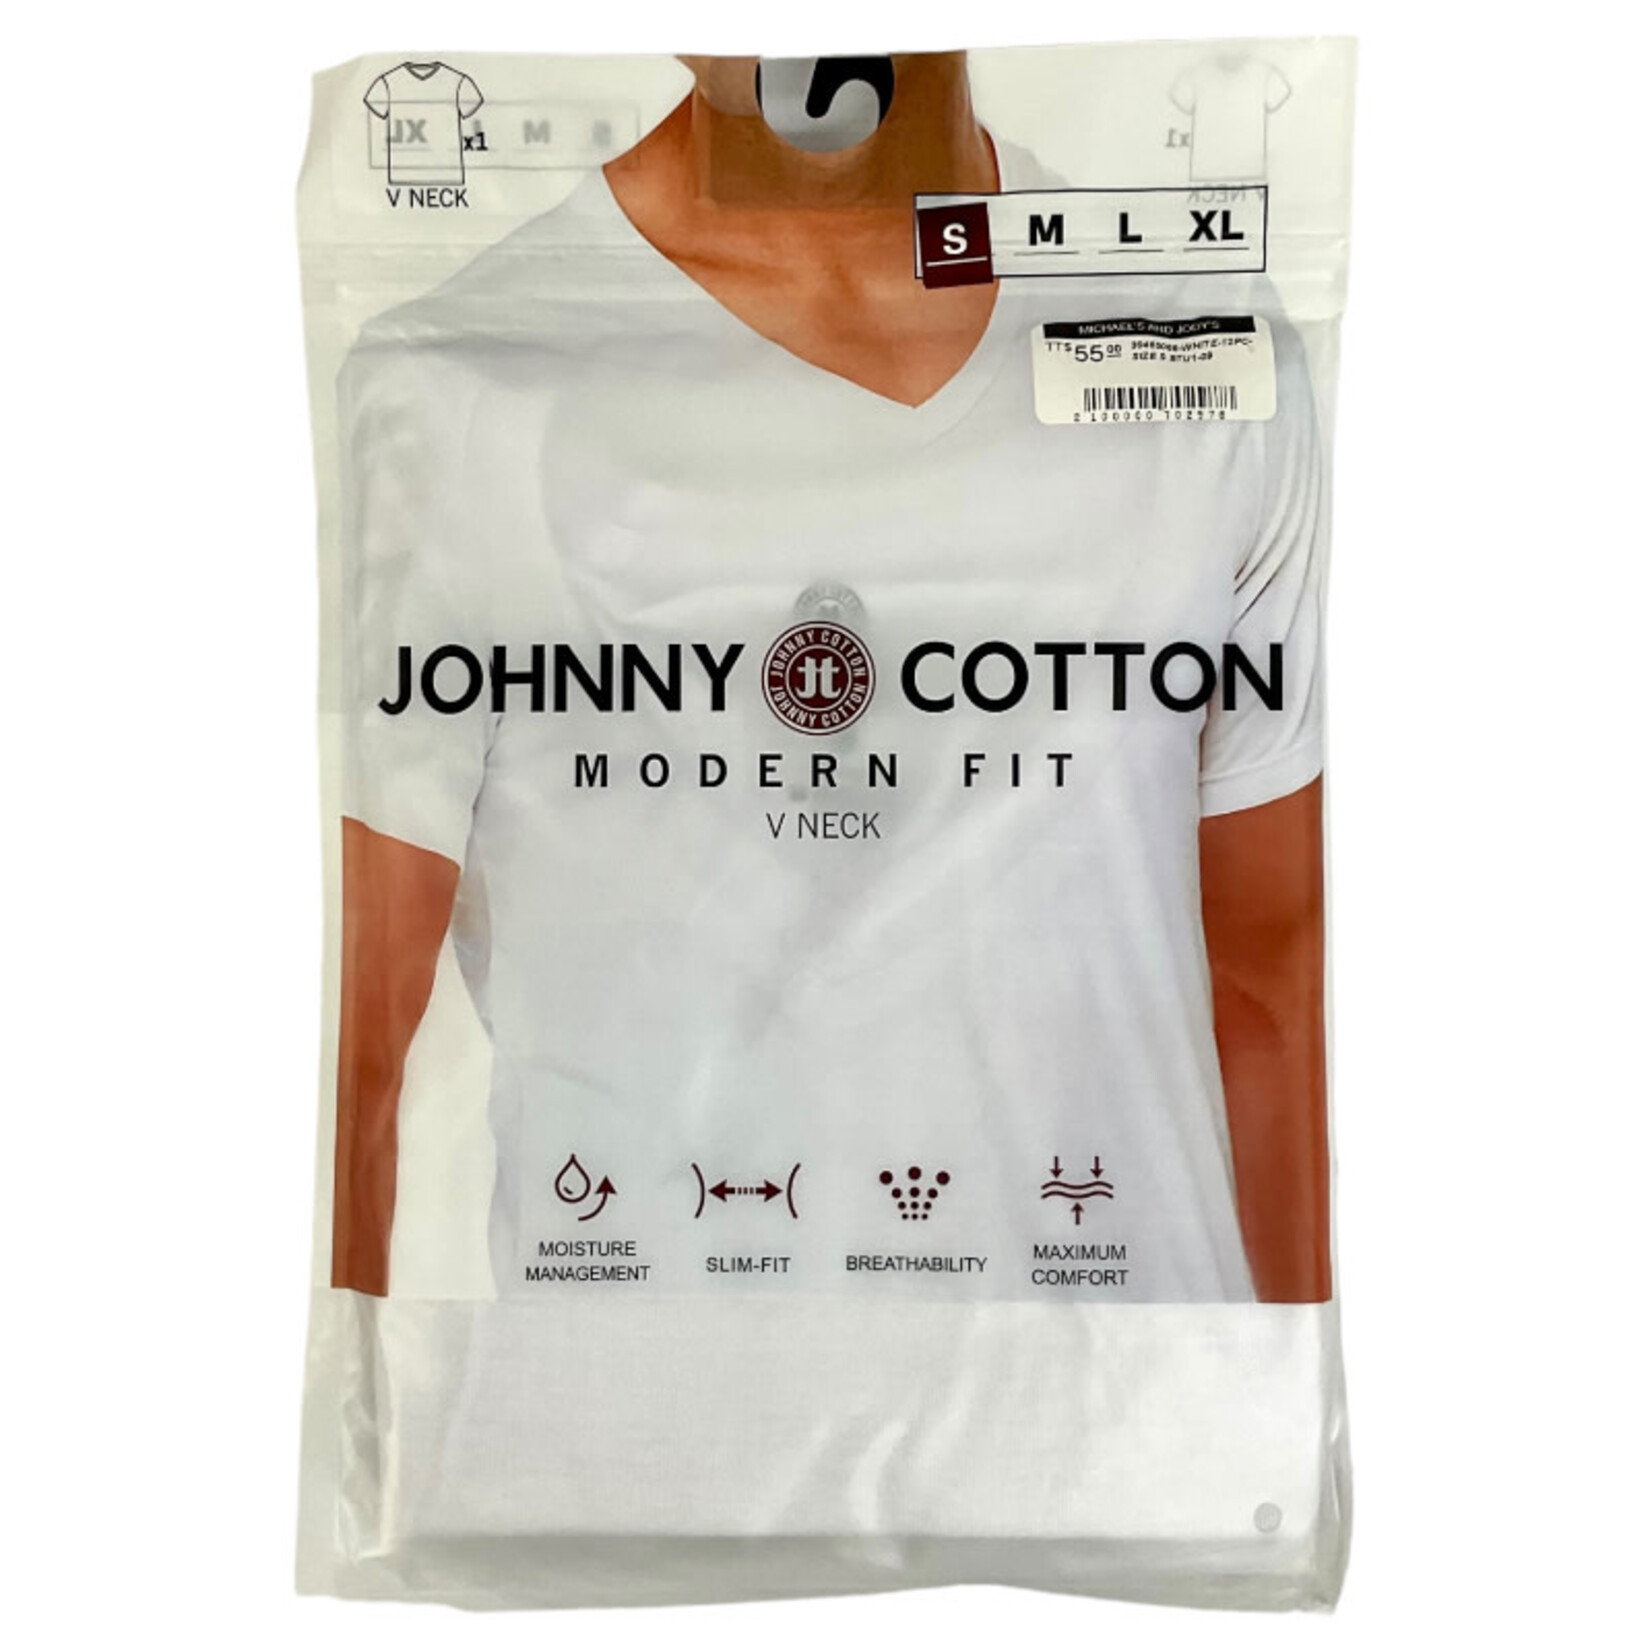 JOHNNY COTTON JOHNNY COTTON MODERN FIT V-NECK T-SHIRT BTU1-09